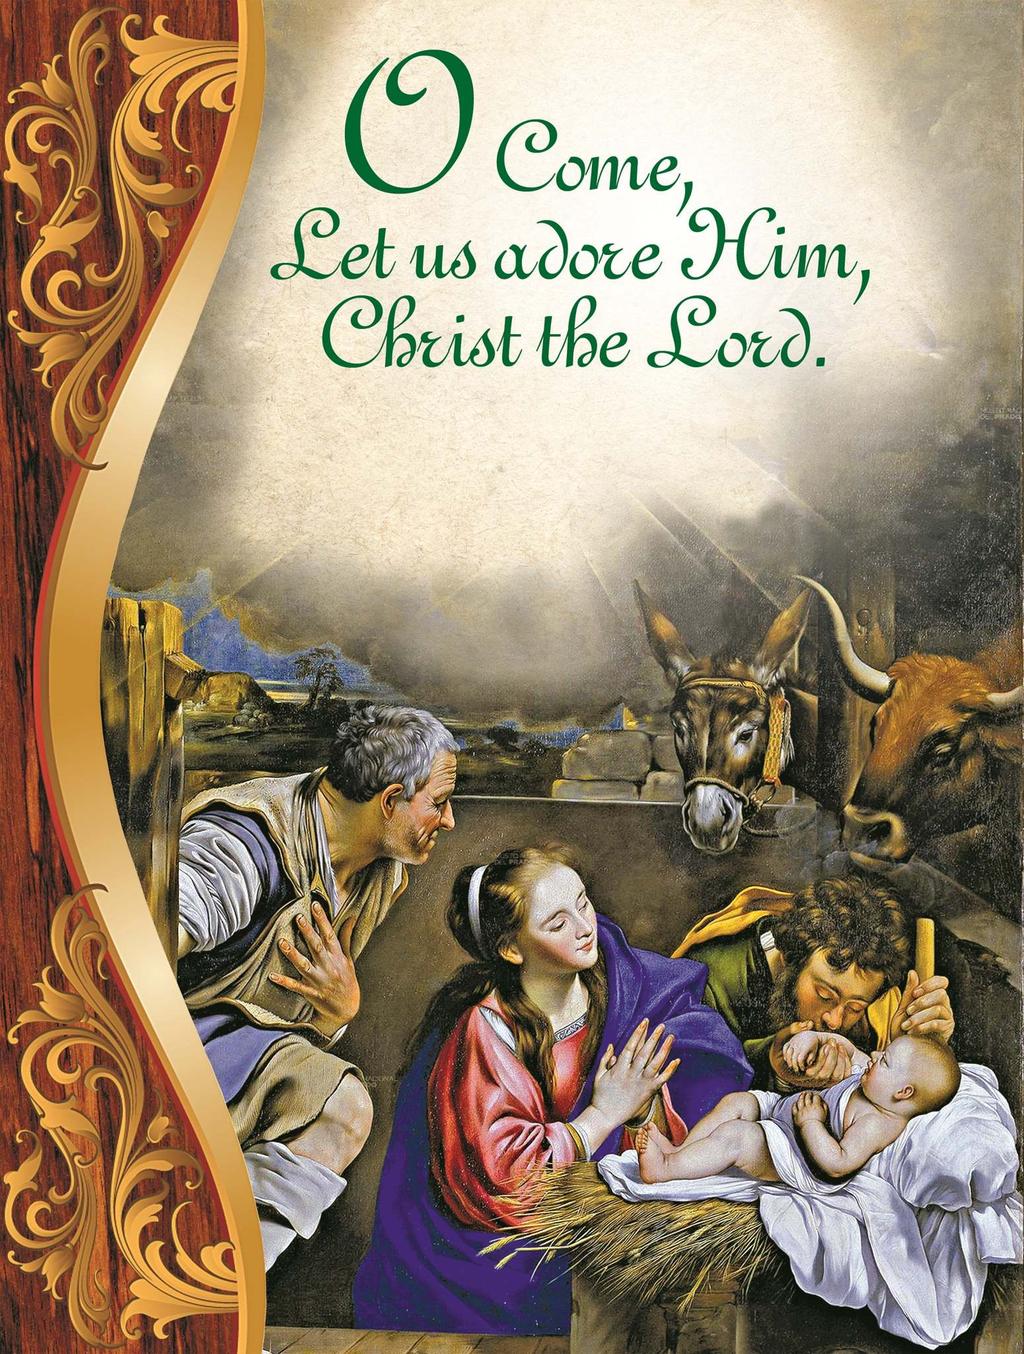 History of Christmas At Christmas, we celebrate e Incarnation: God becoming one of us.